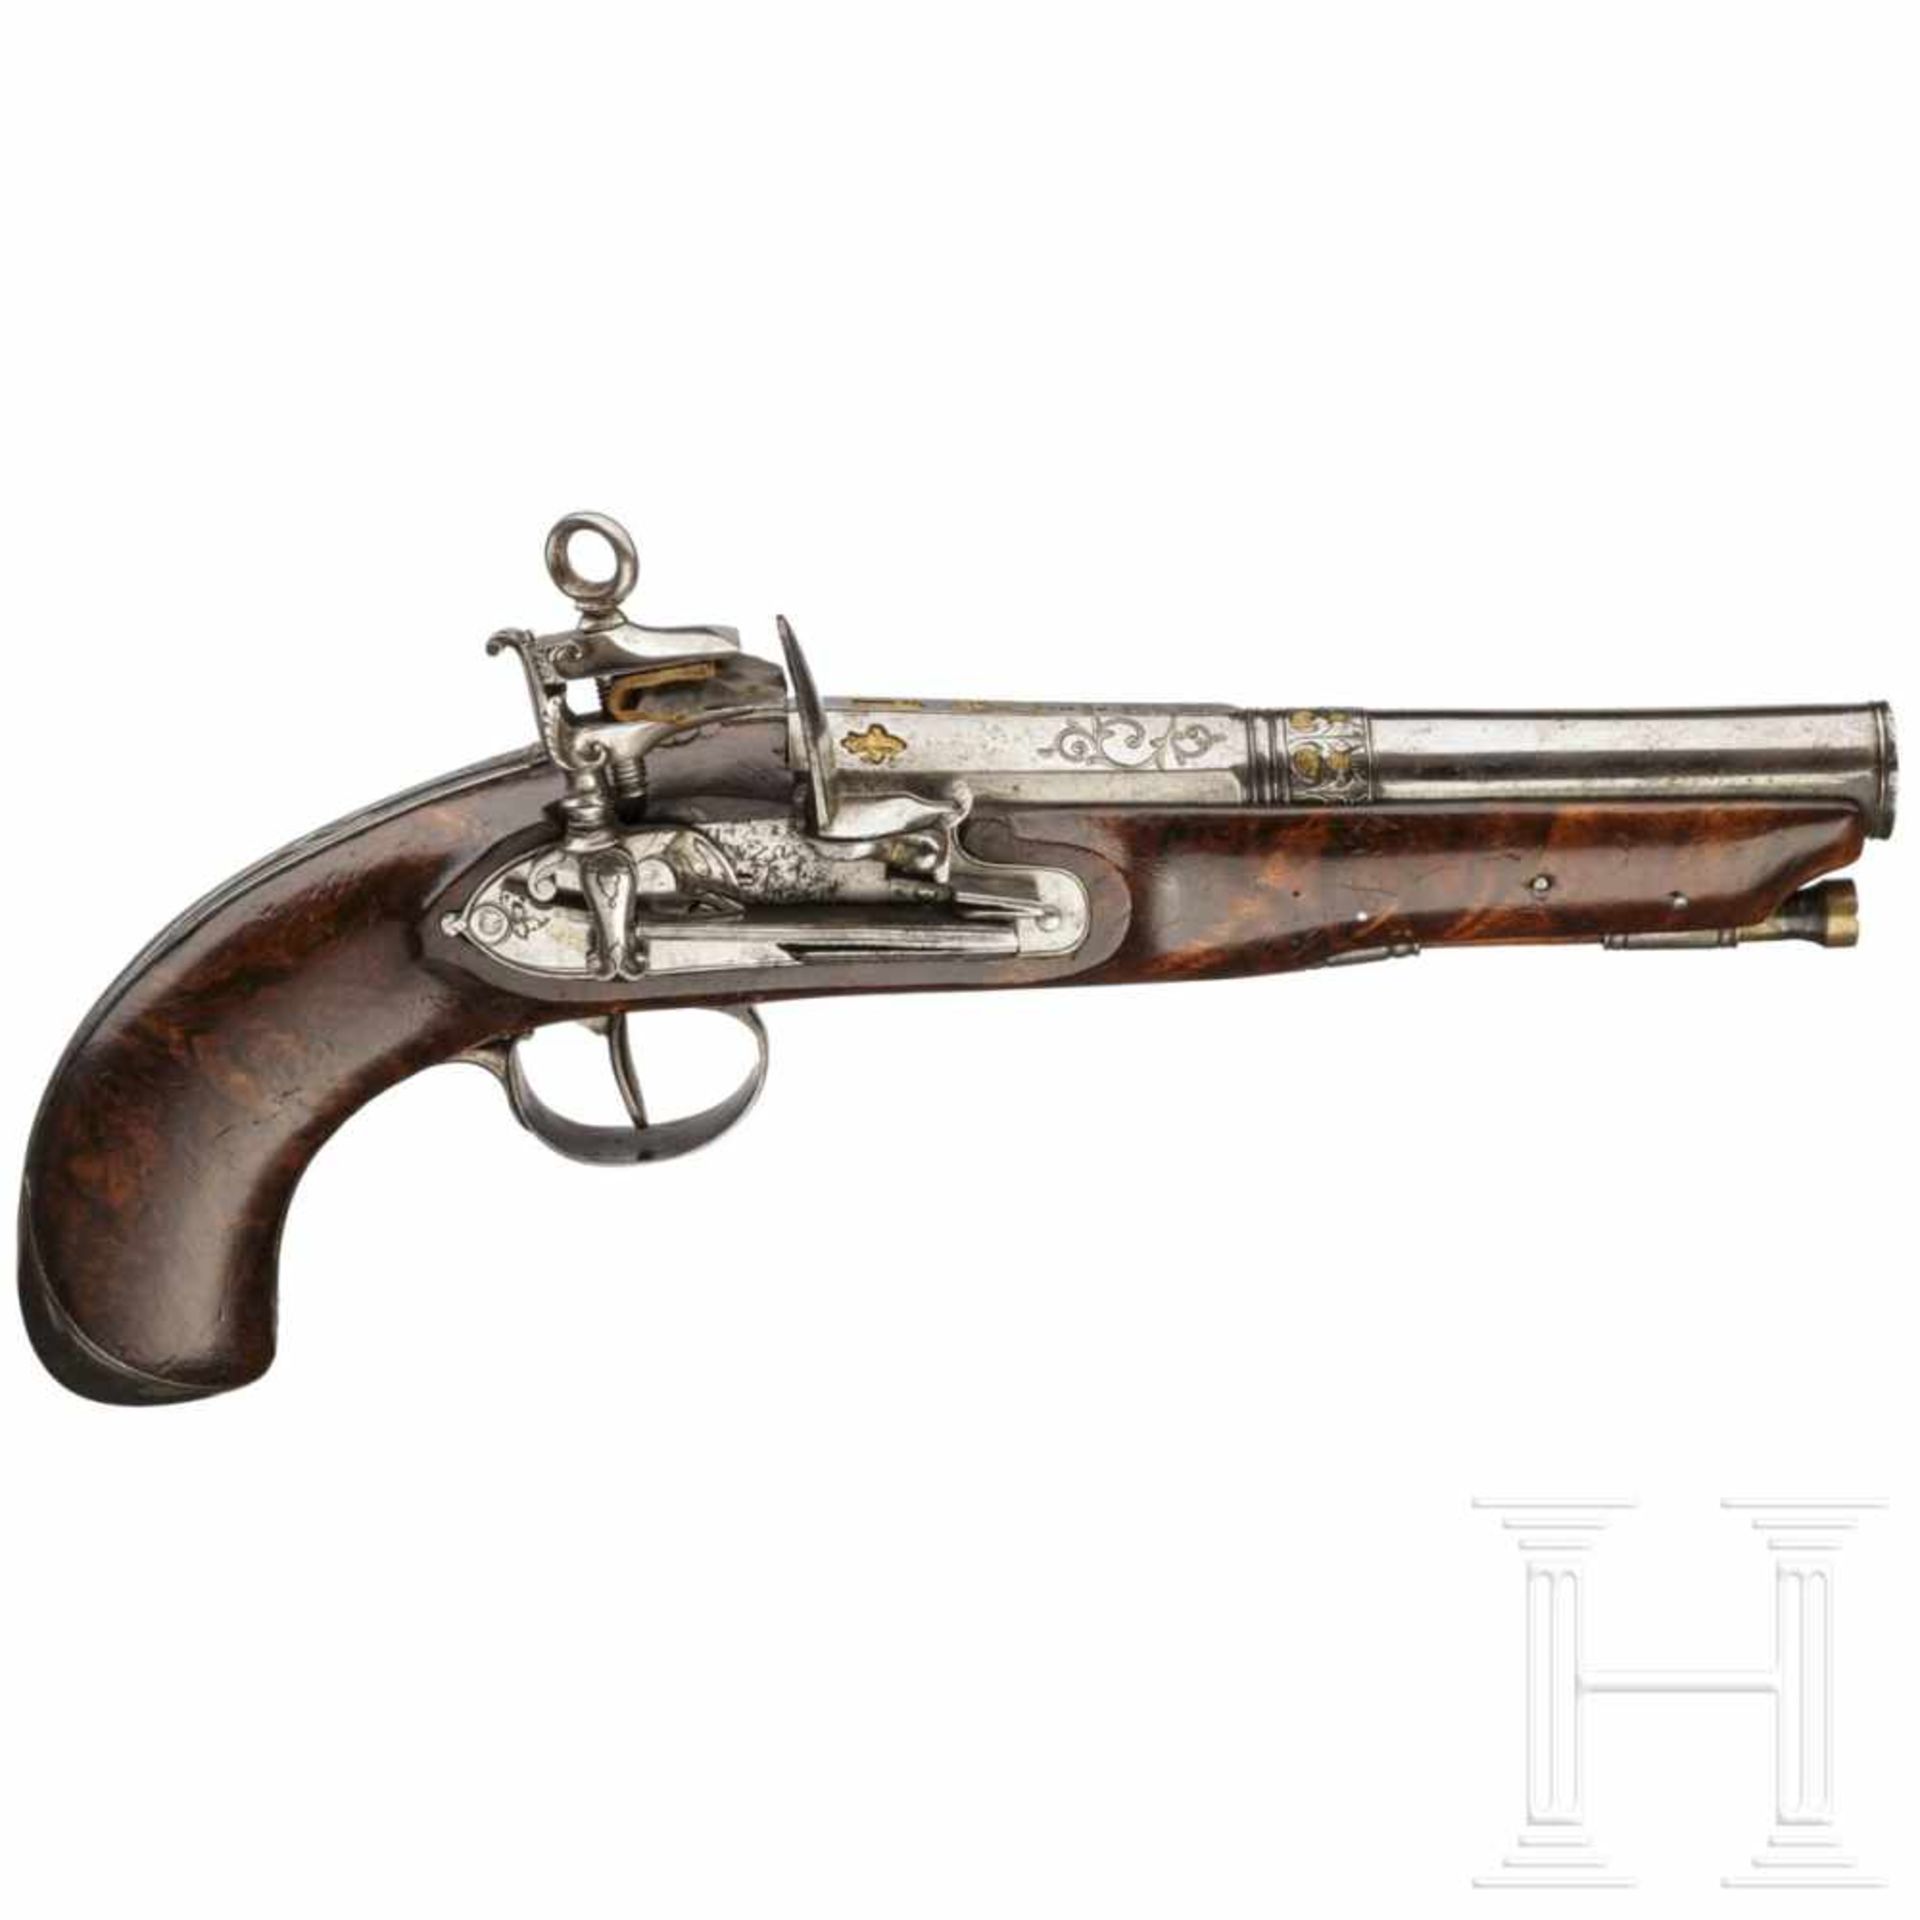 A miquelet pistol by Ignazio Maria Ybarzabal in Eibar, circa 1790Octagonal to round barrel with